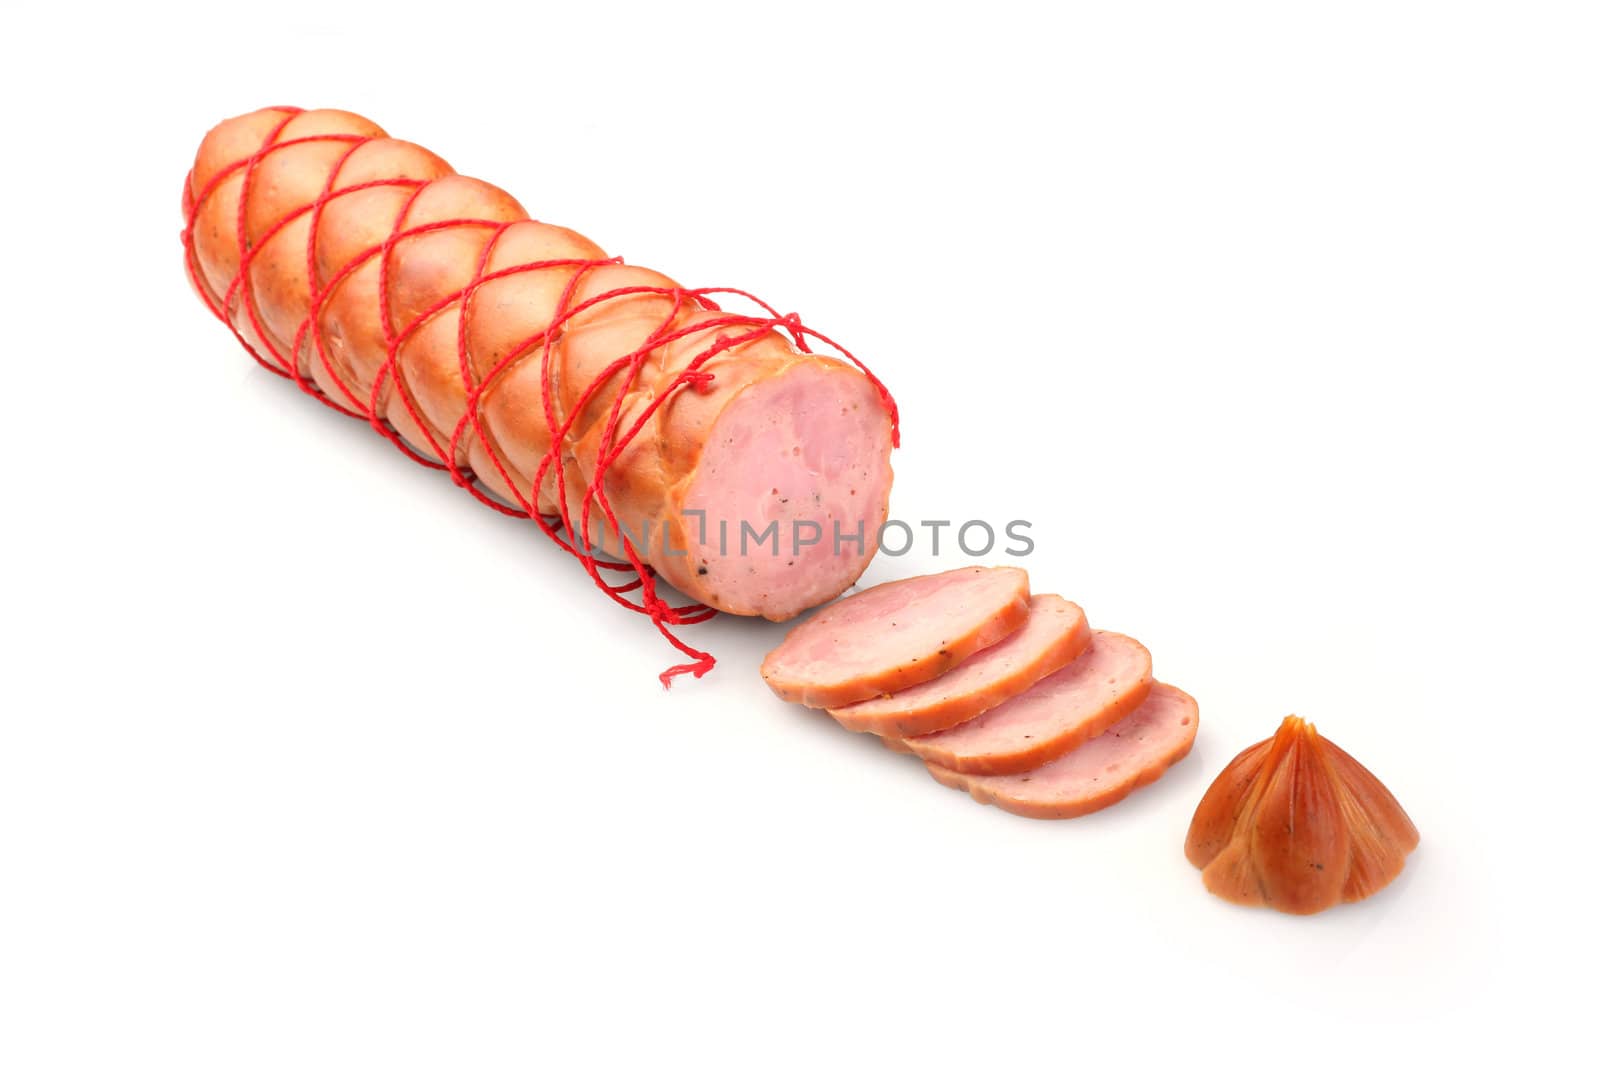 Sliced sausage by igor_stramyk